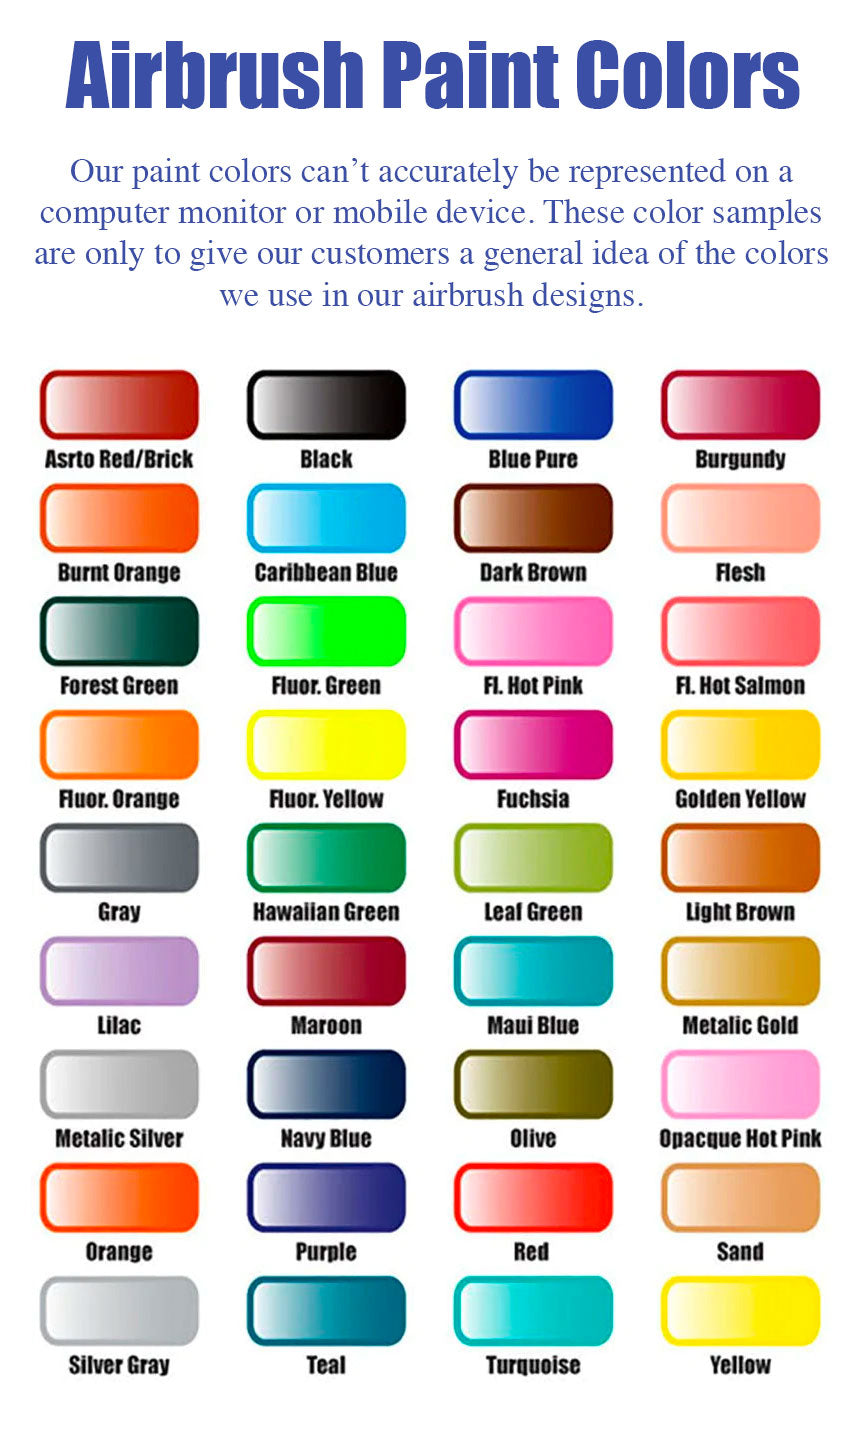 Airbrush T-shirt - Pet Portrait - Your Pet's Name - You Choose the Colors